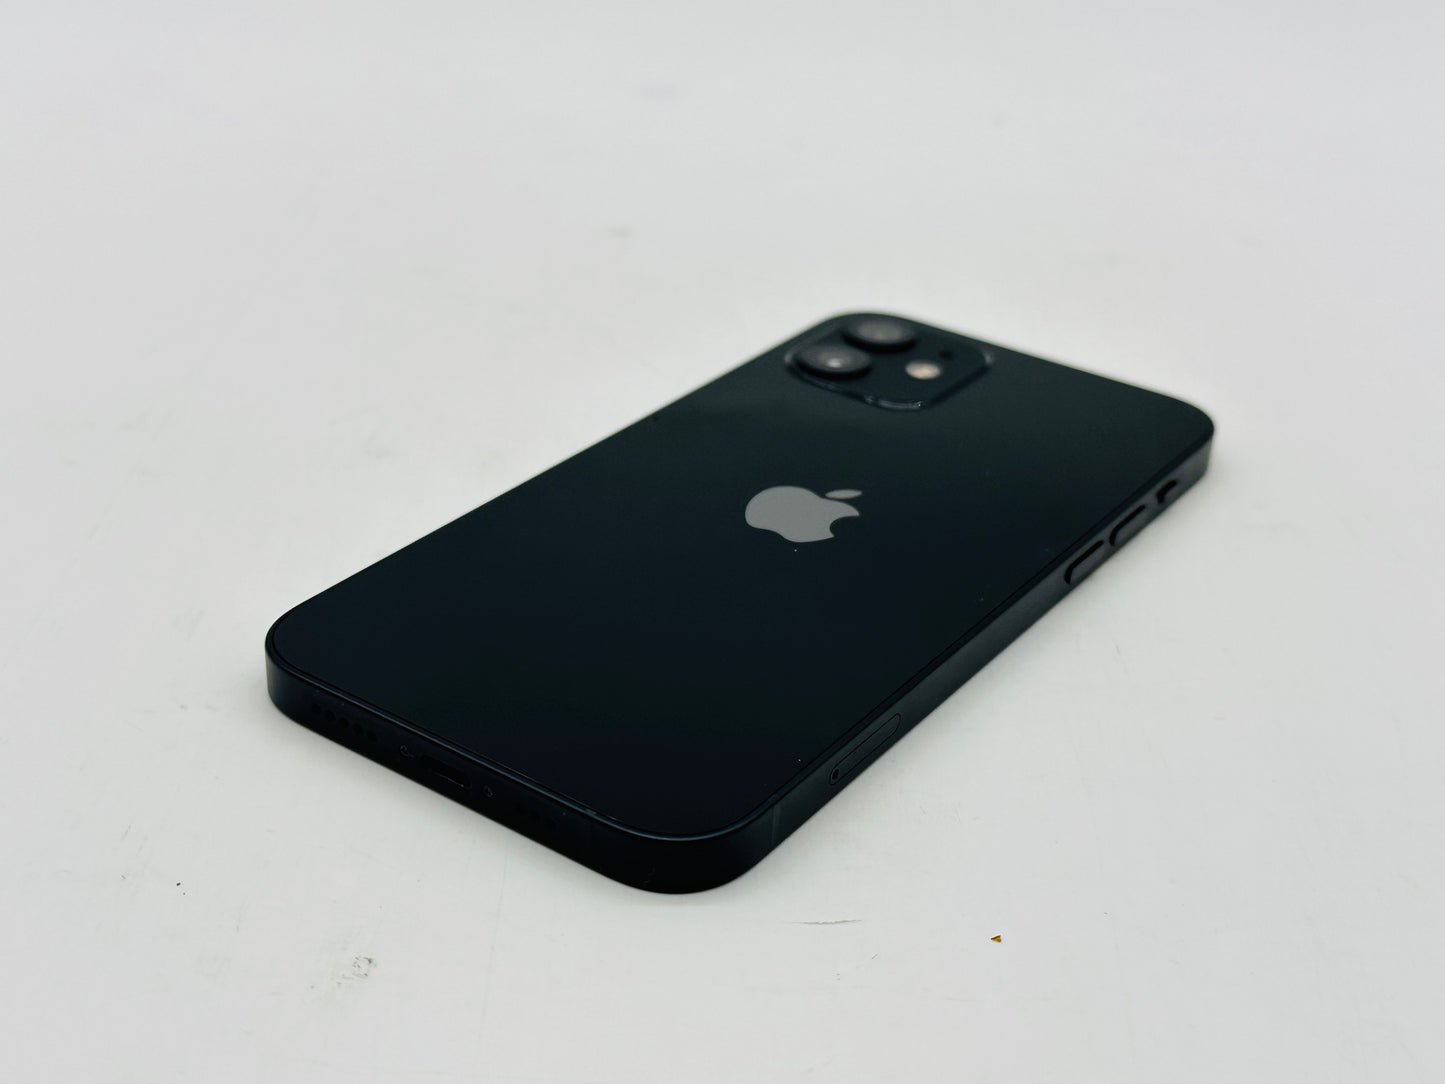 Apple iPhone 12 GSM/CDMA Unlocked (128GB) "Black" Grade B